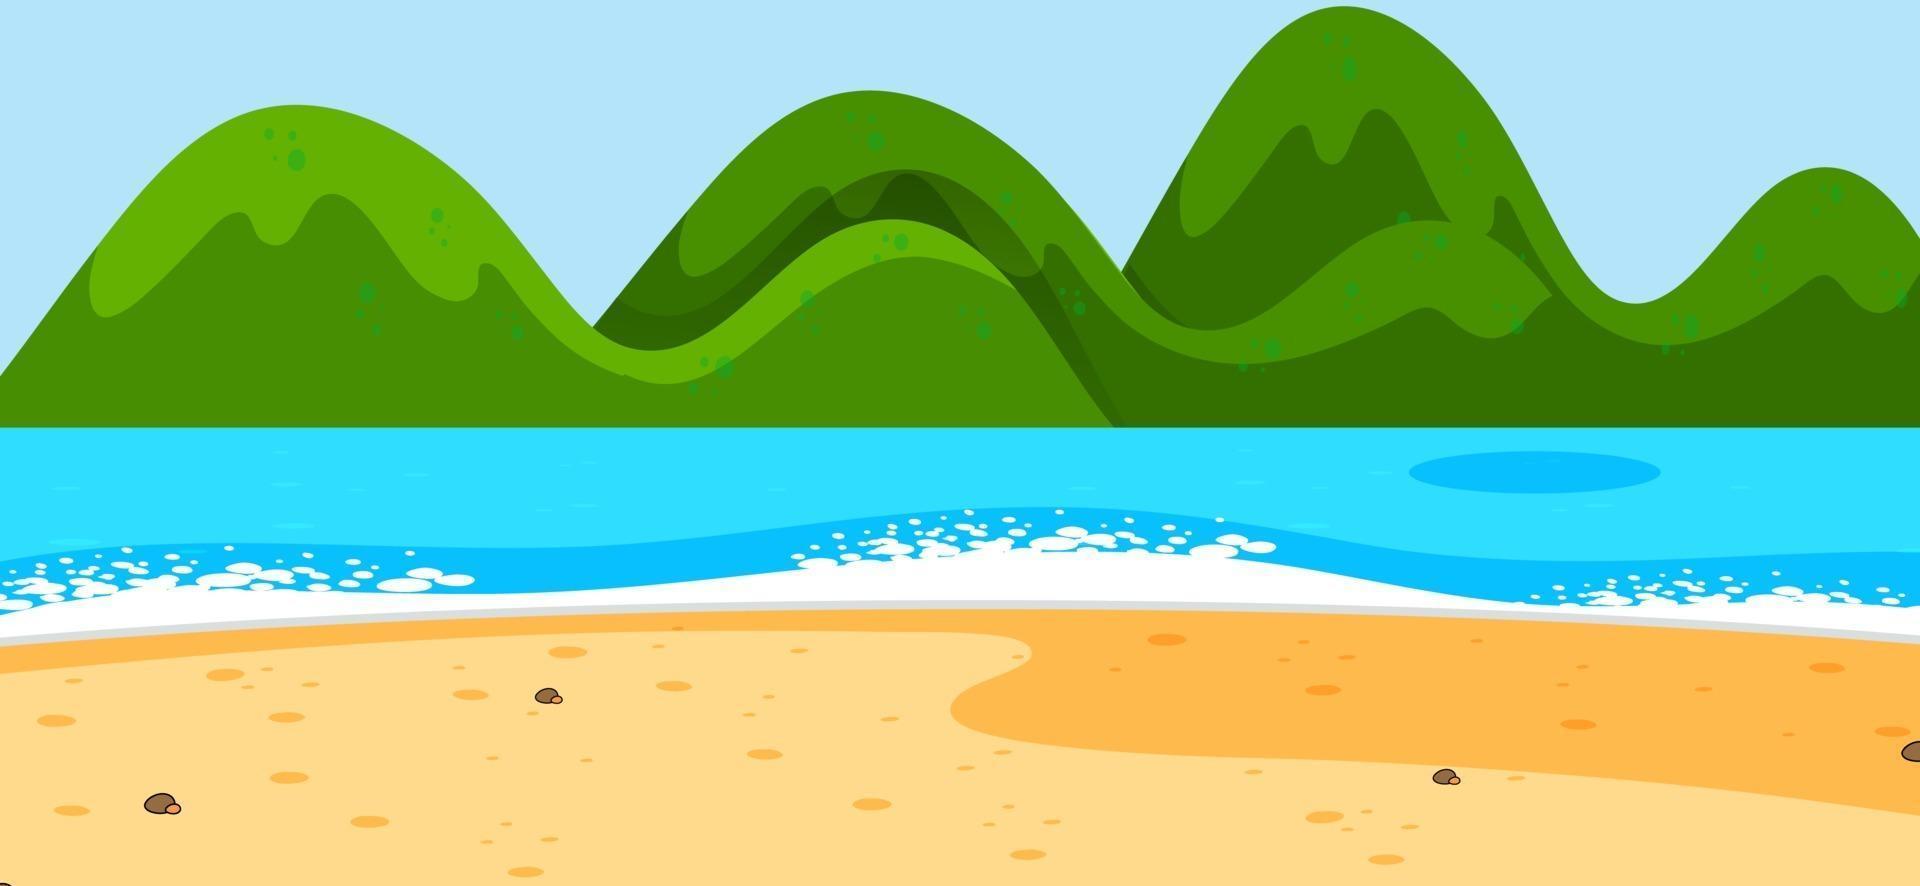 tom strandlandskapsscen med berg vektor